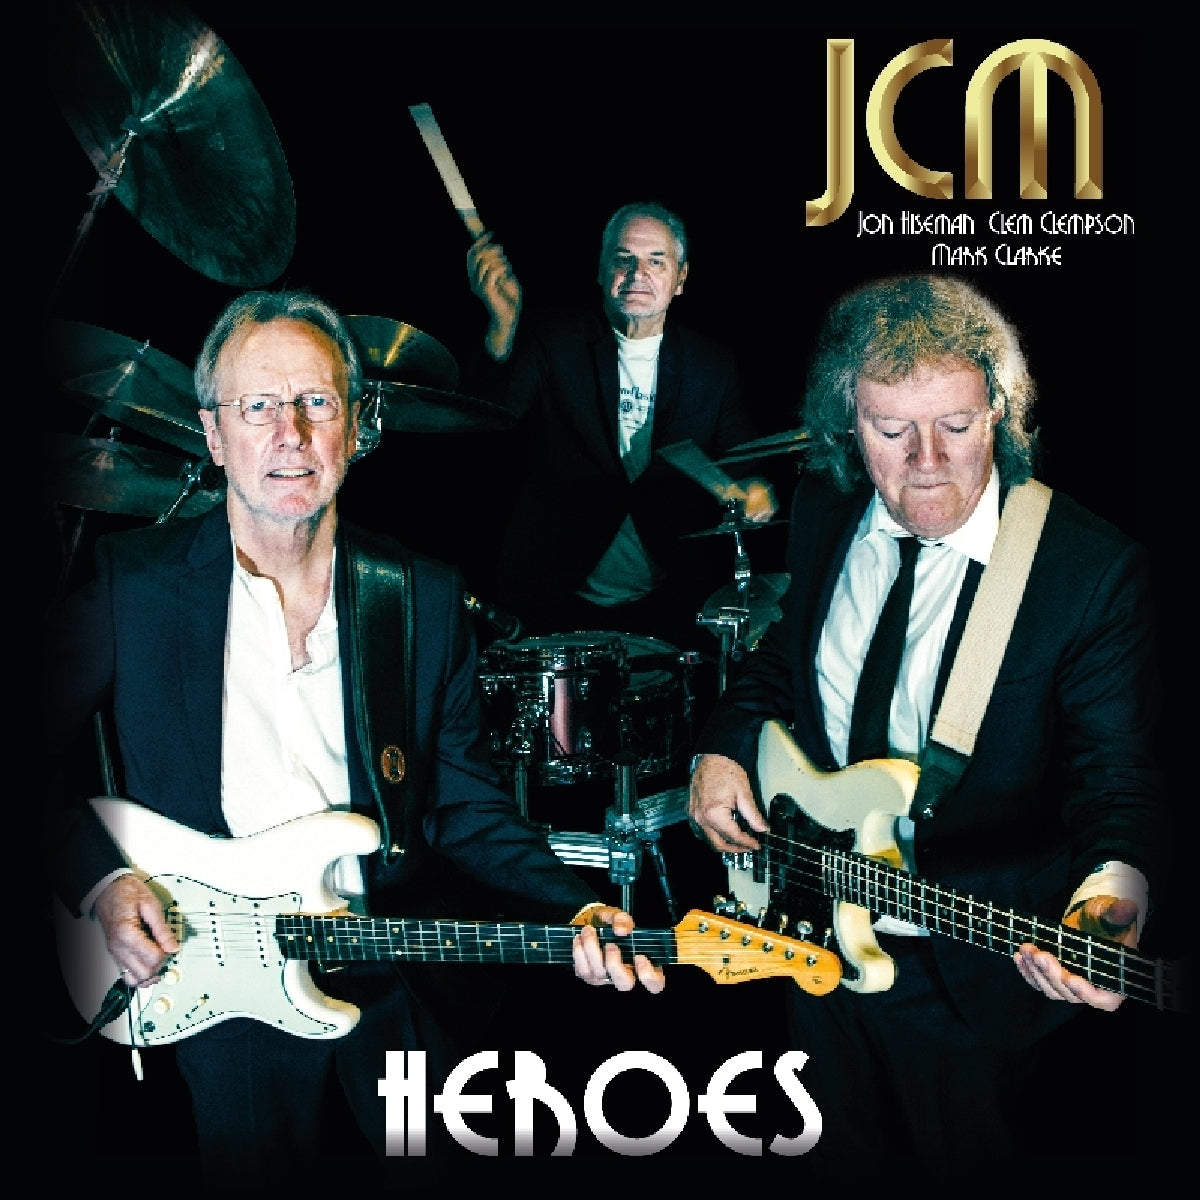 JCM (Jon Hiseman Clem Clempson & Mark Clarke) - Heroes (CD)